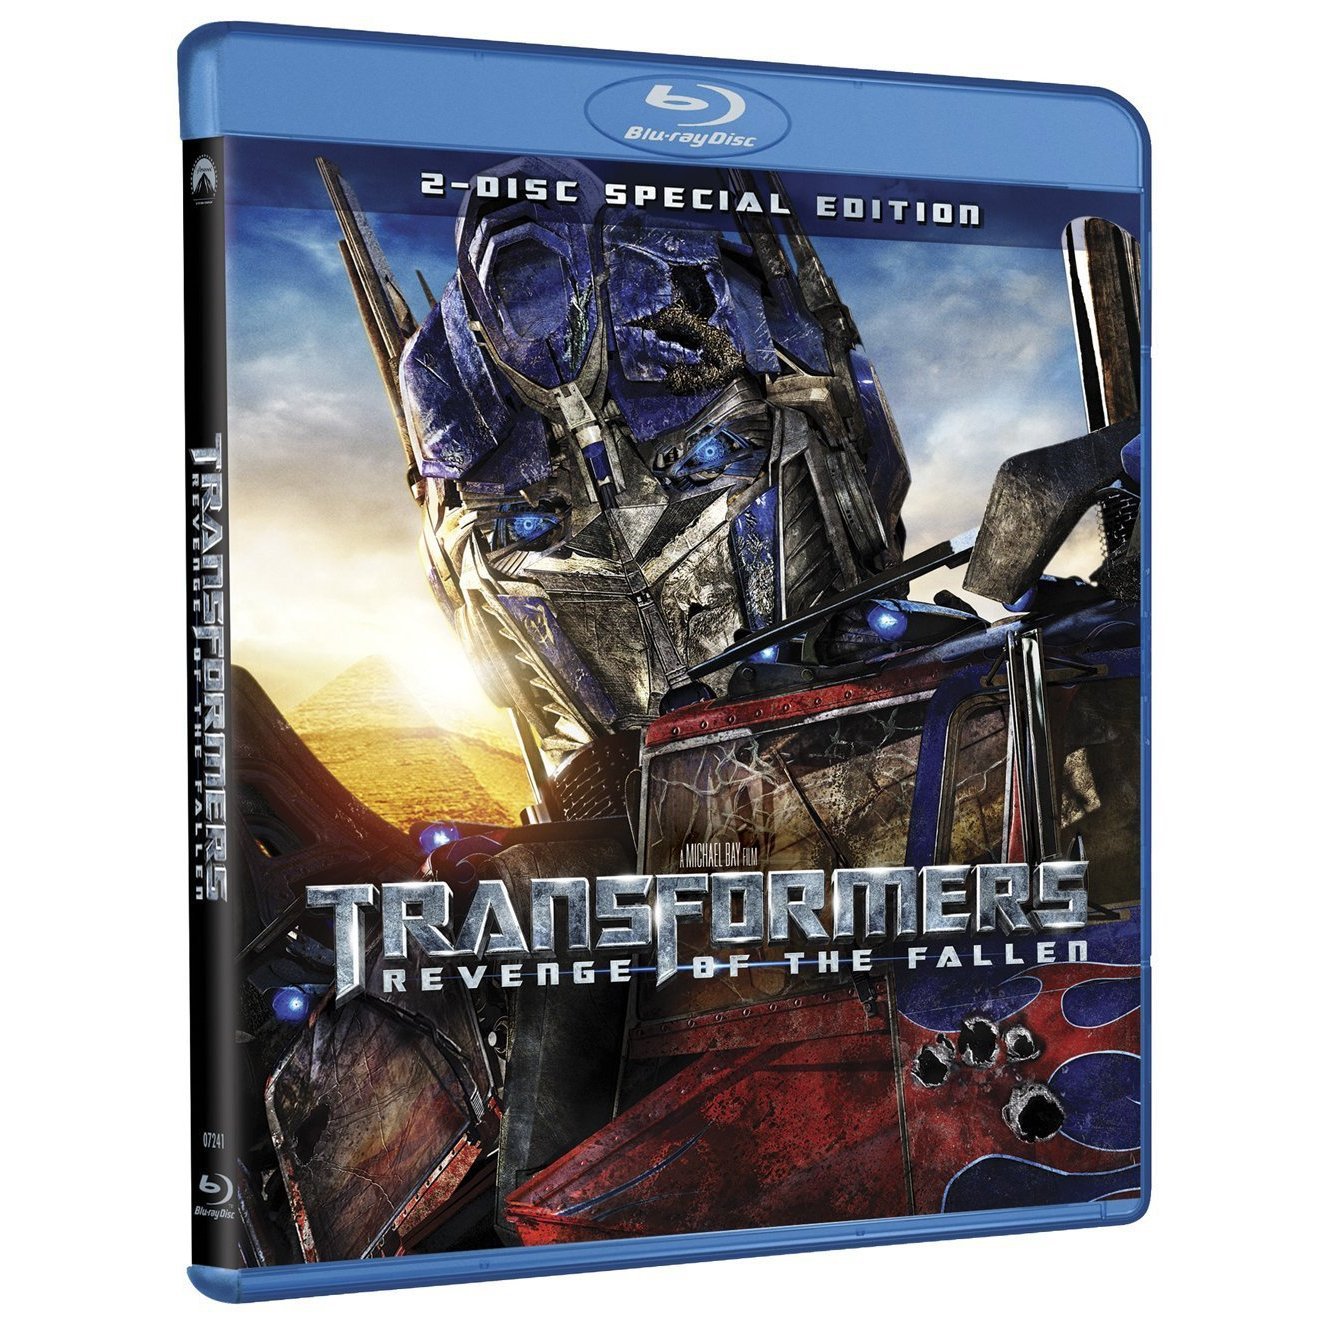 Transformers: RotF